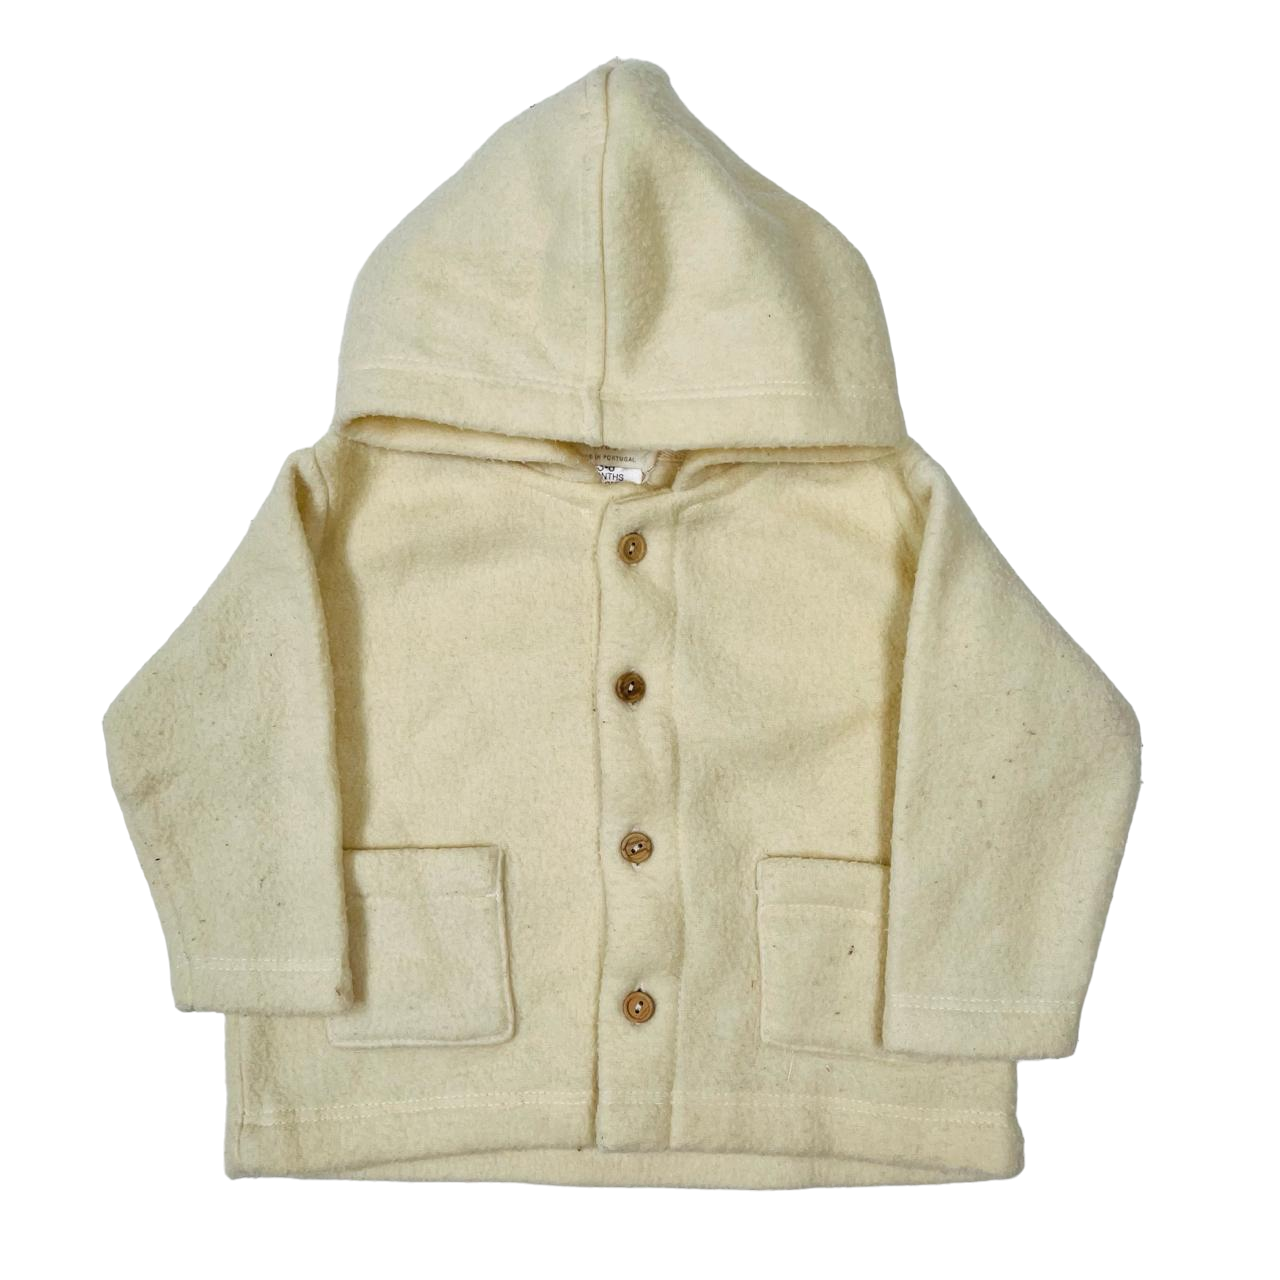 Abrigo de polar crema con botones cafe y bolsillos